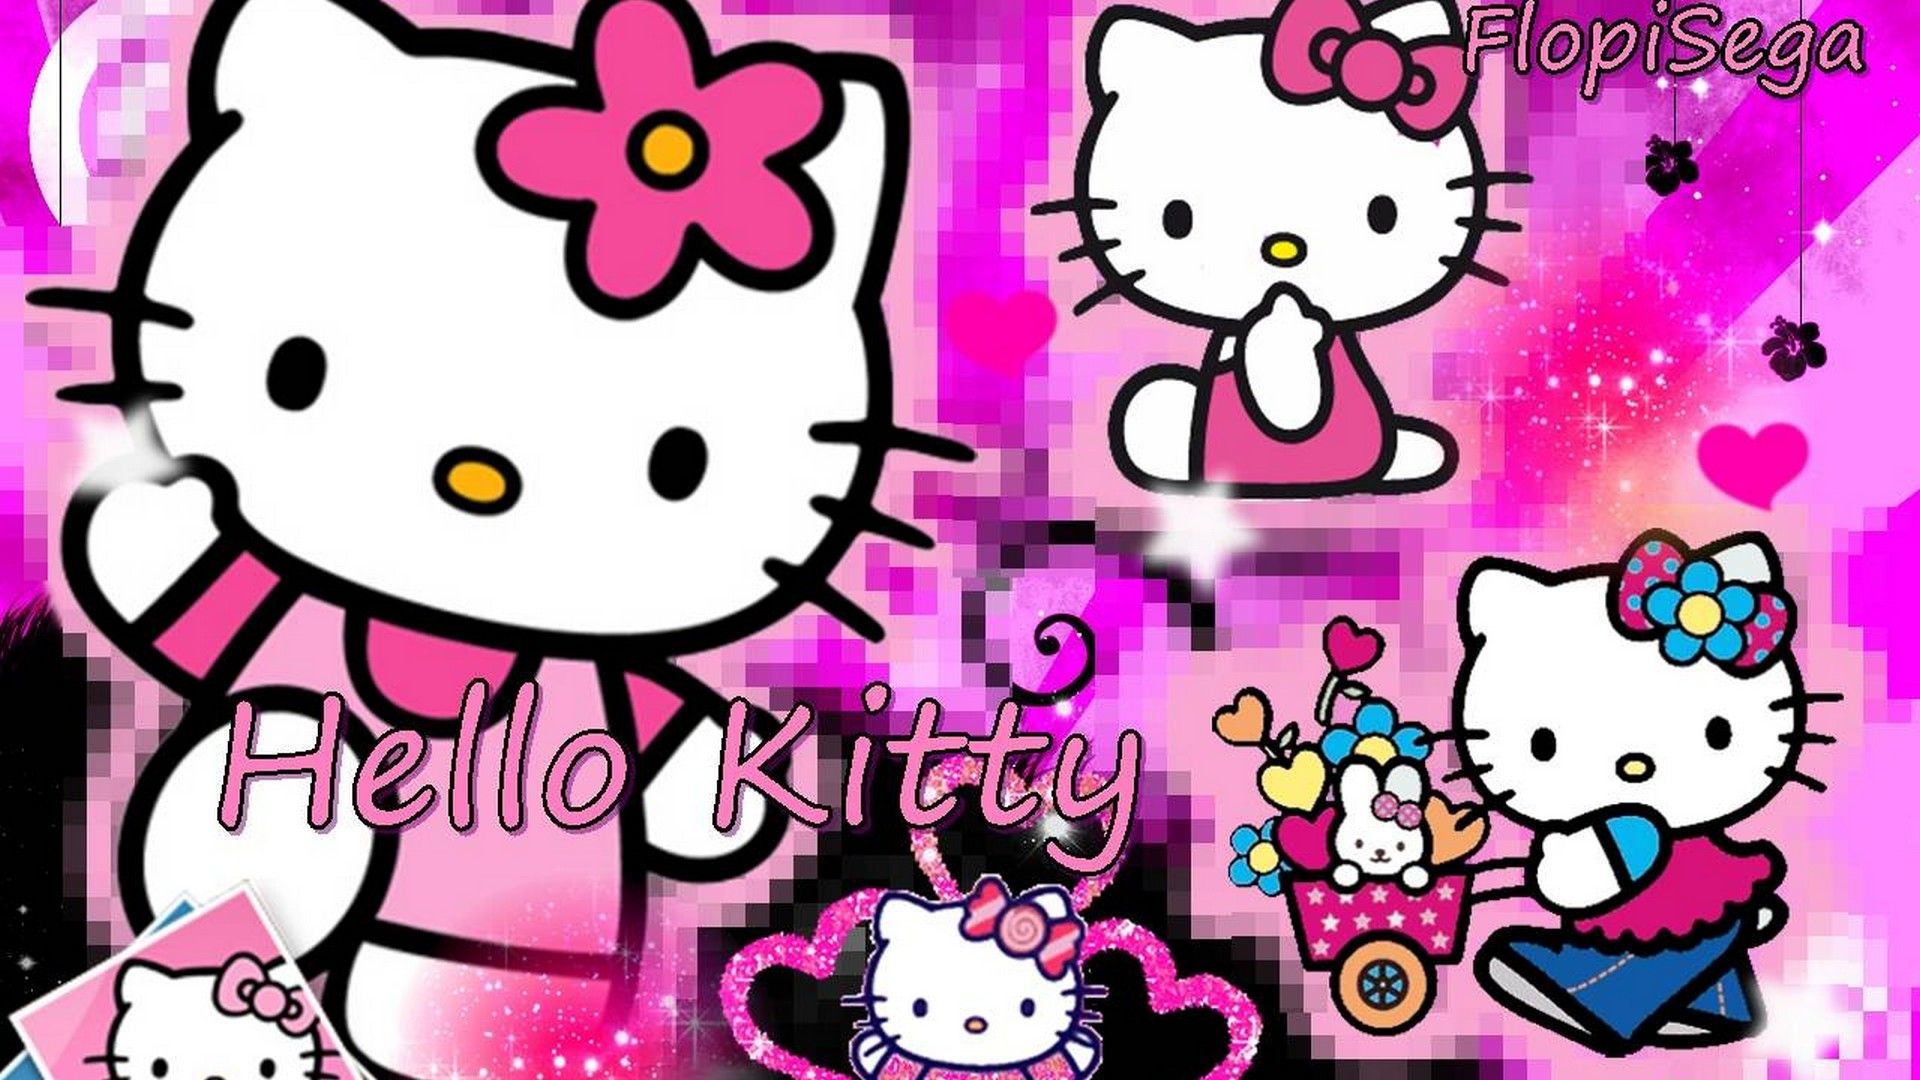 Hello Kitty Images Wallpaper For Desktop Best HD Wallpapers